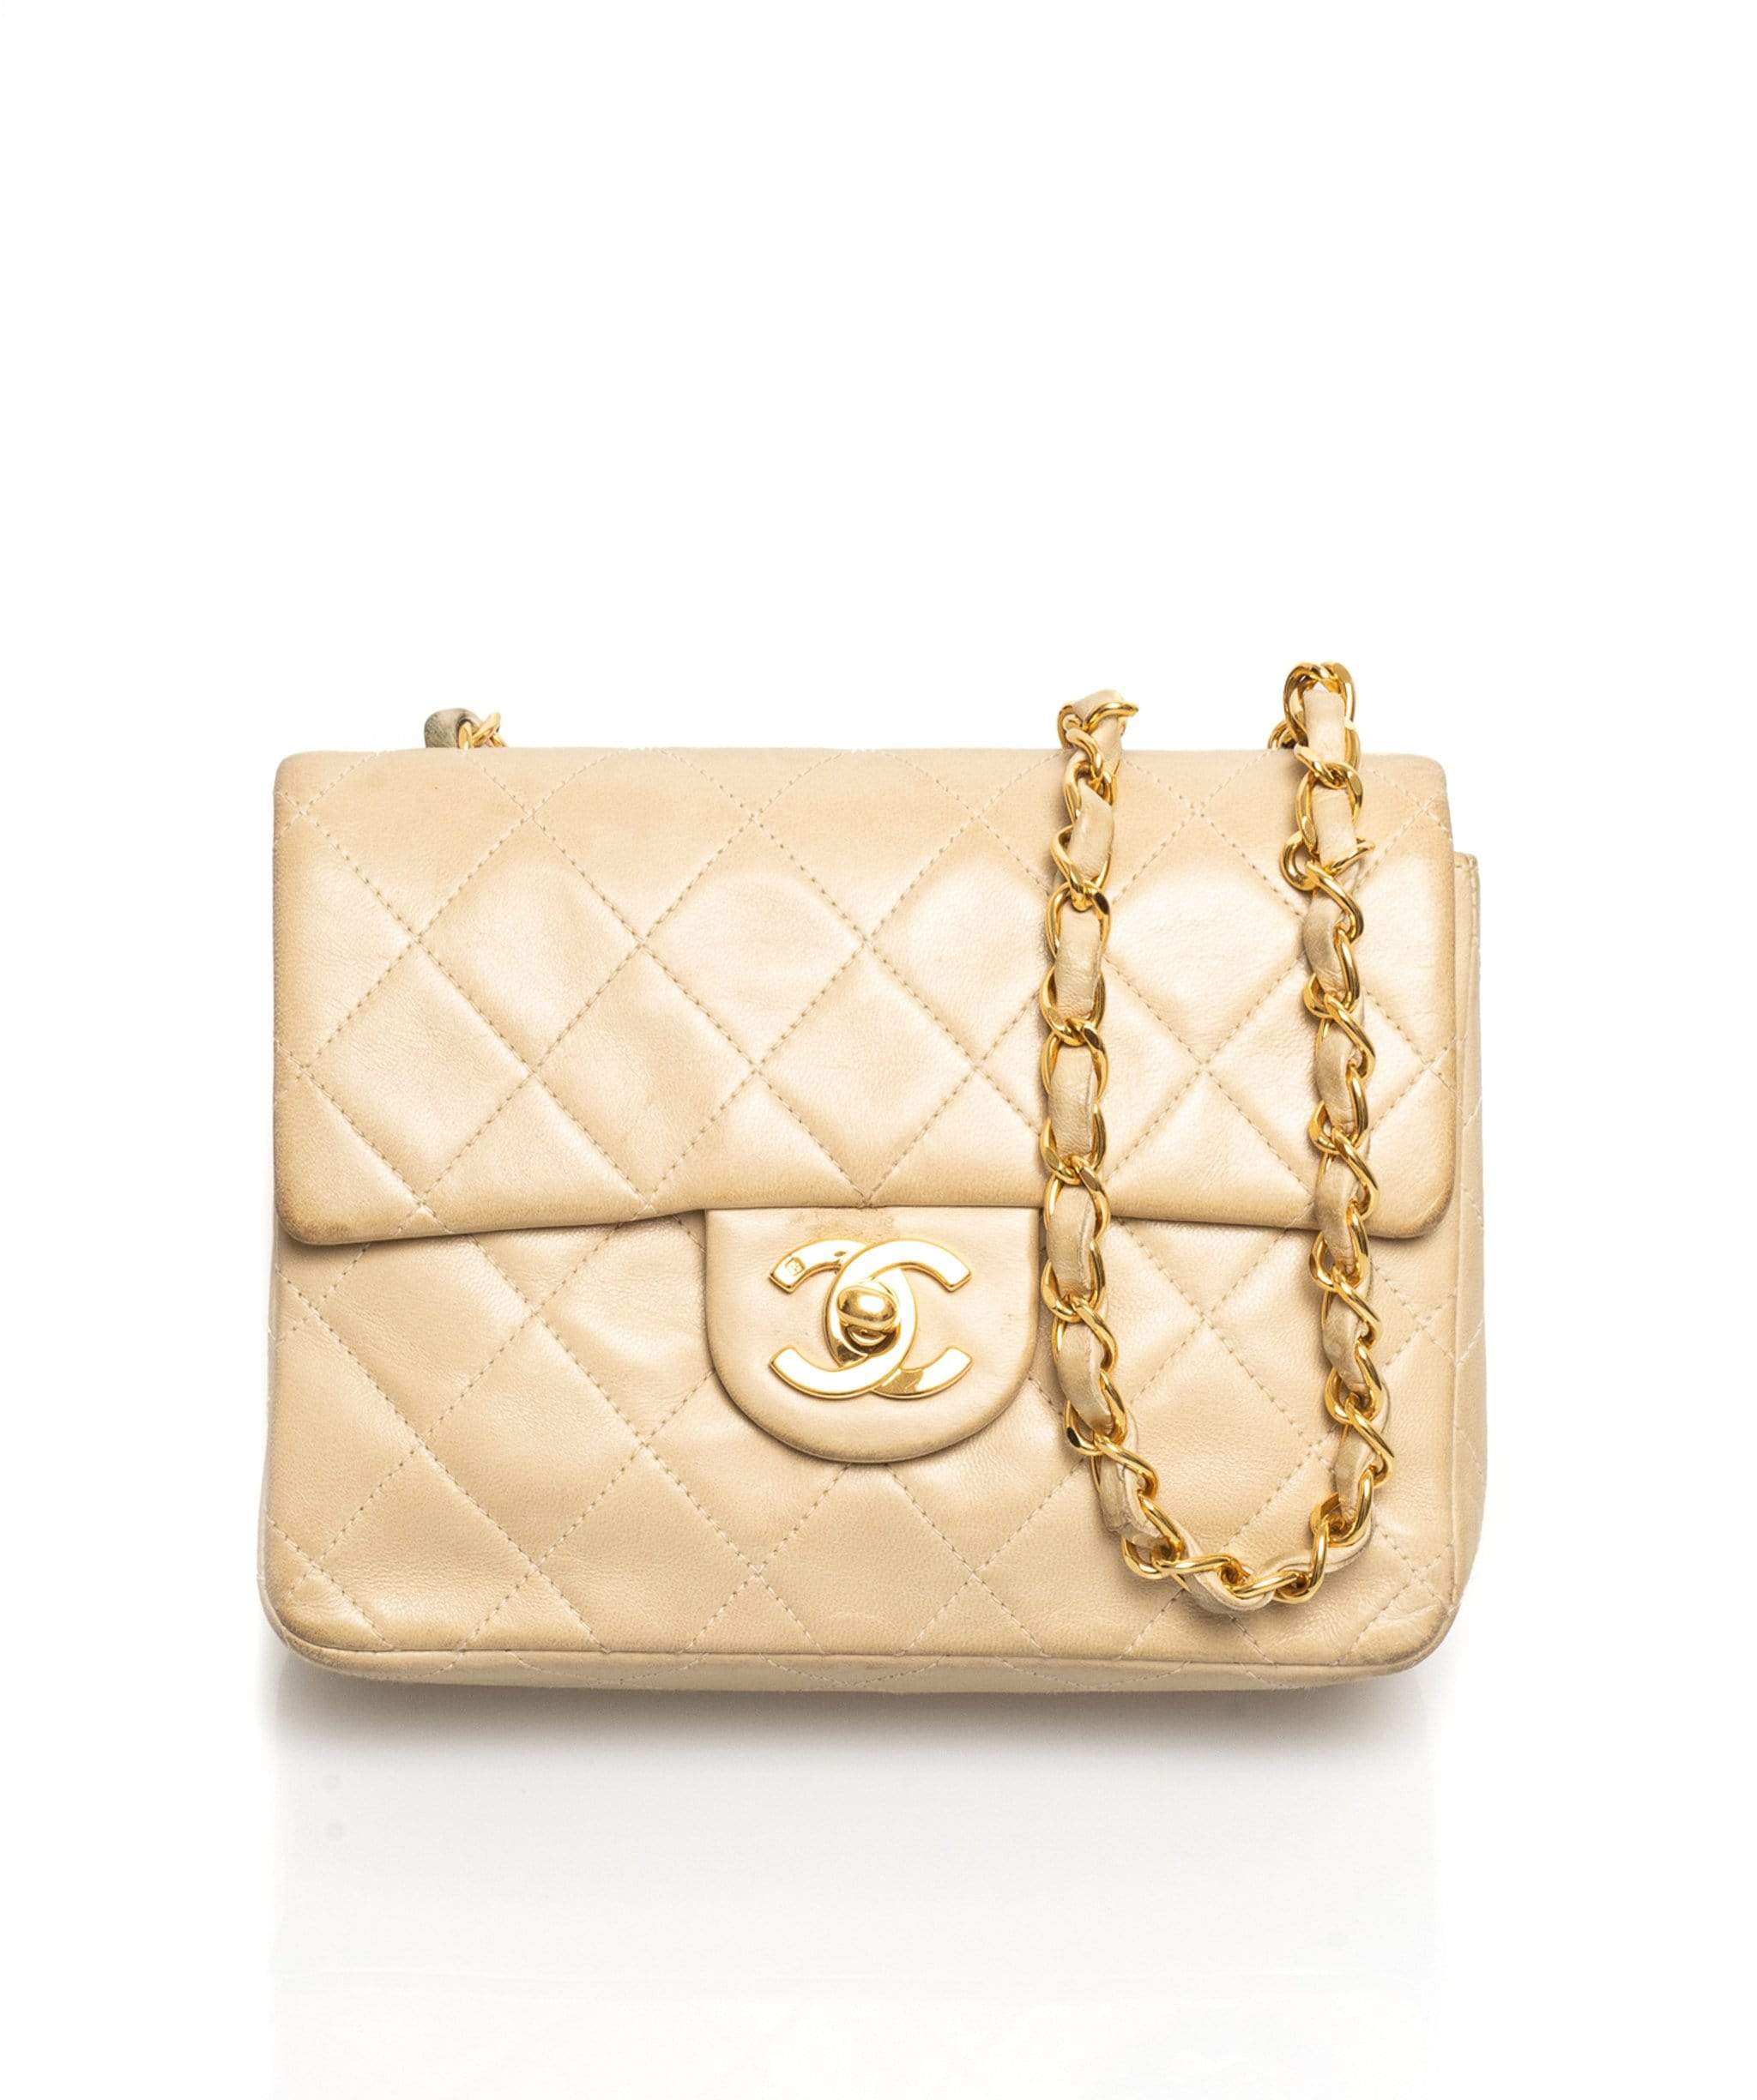 Chanel Medium Flap Bag Gold Ivory Limited Edition